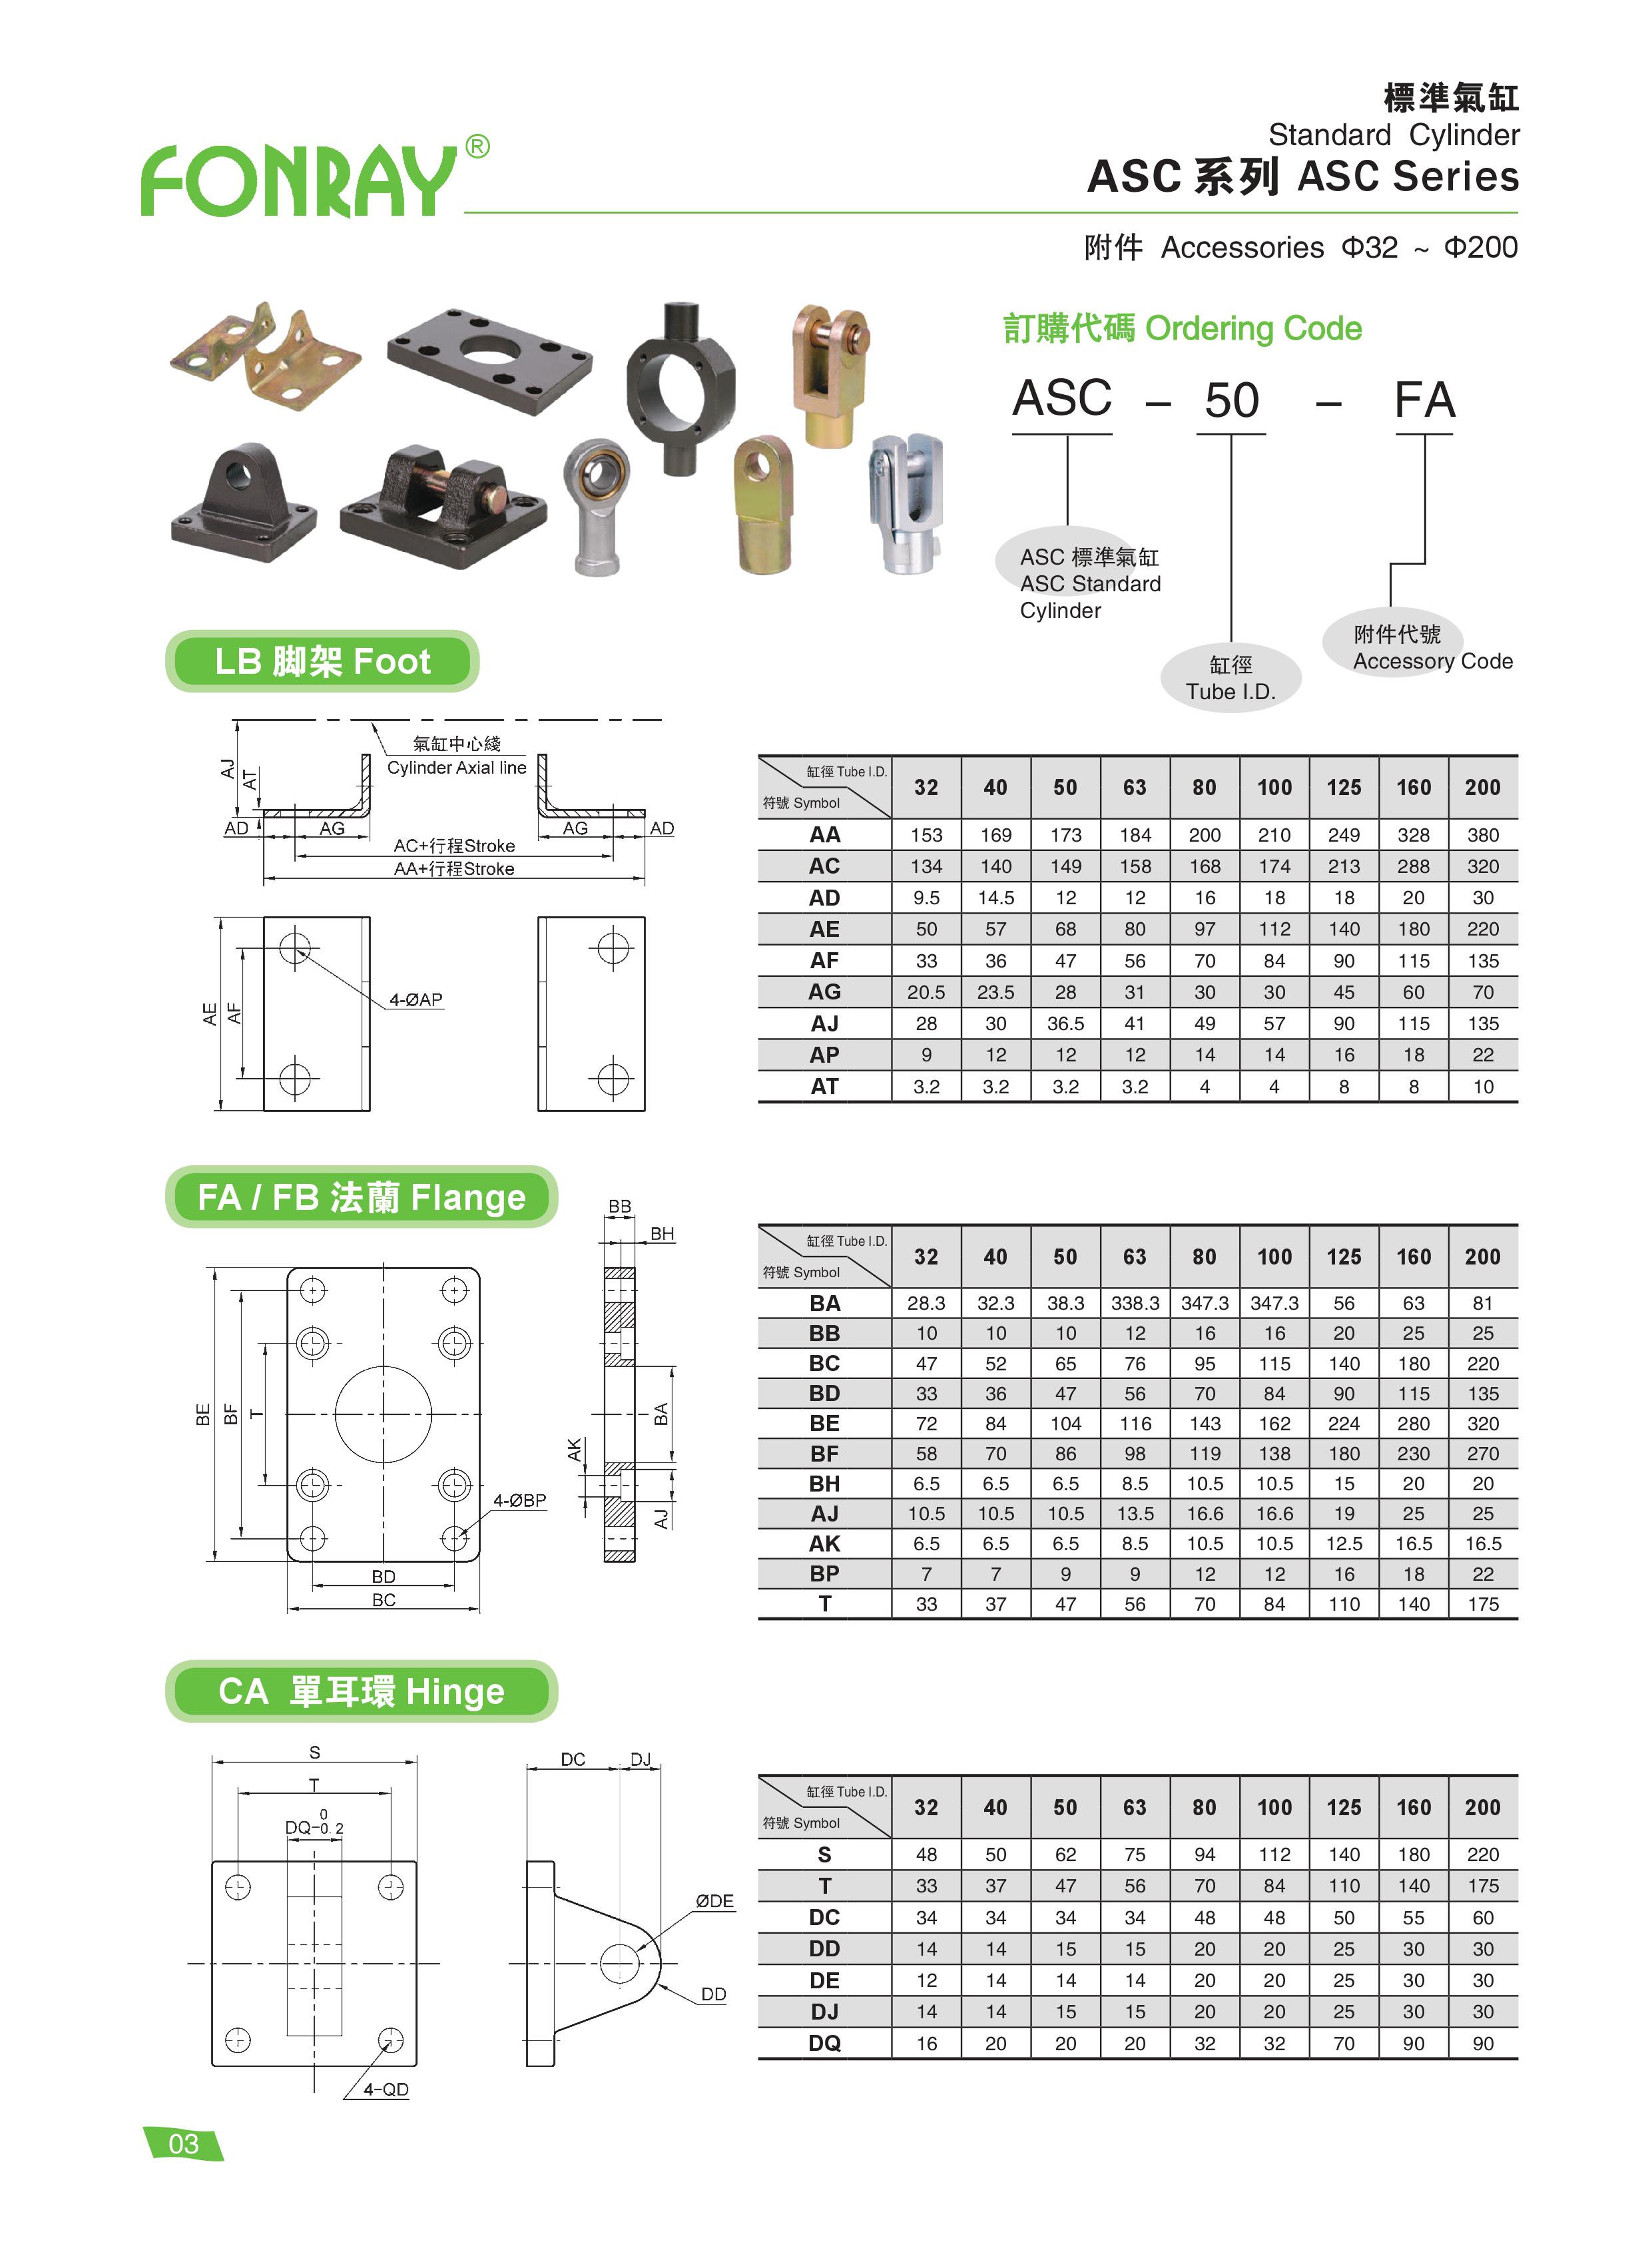 Standard Cylinders - ASC Standard Cylinders Accessories(FB、CB、TC)